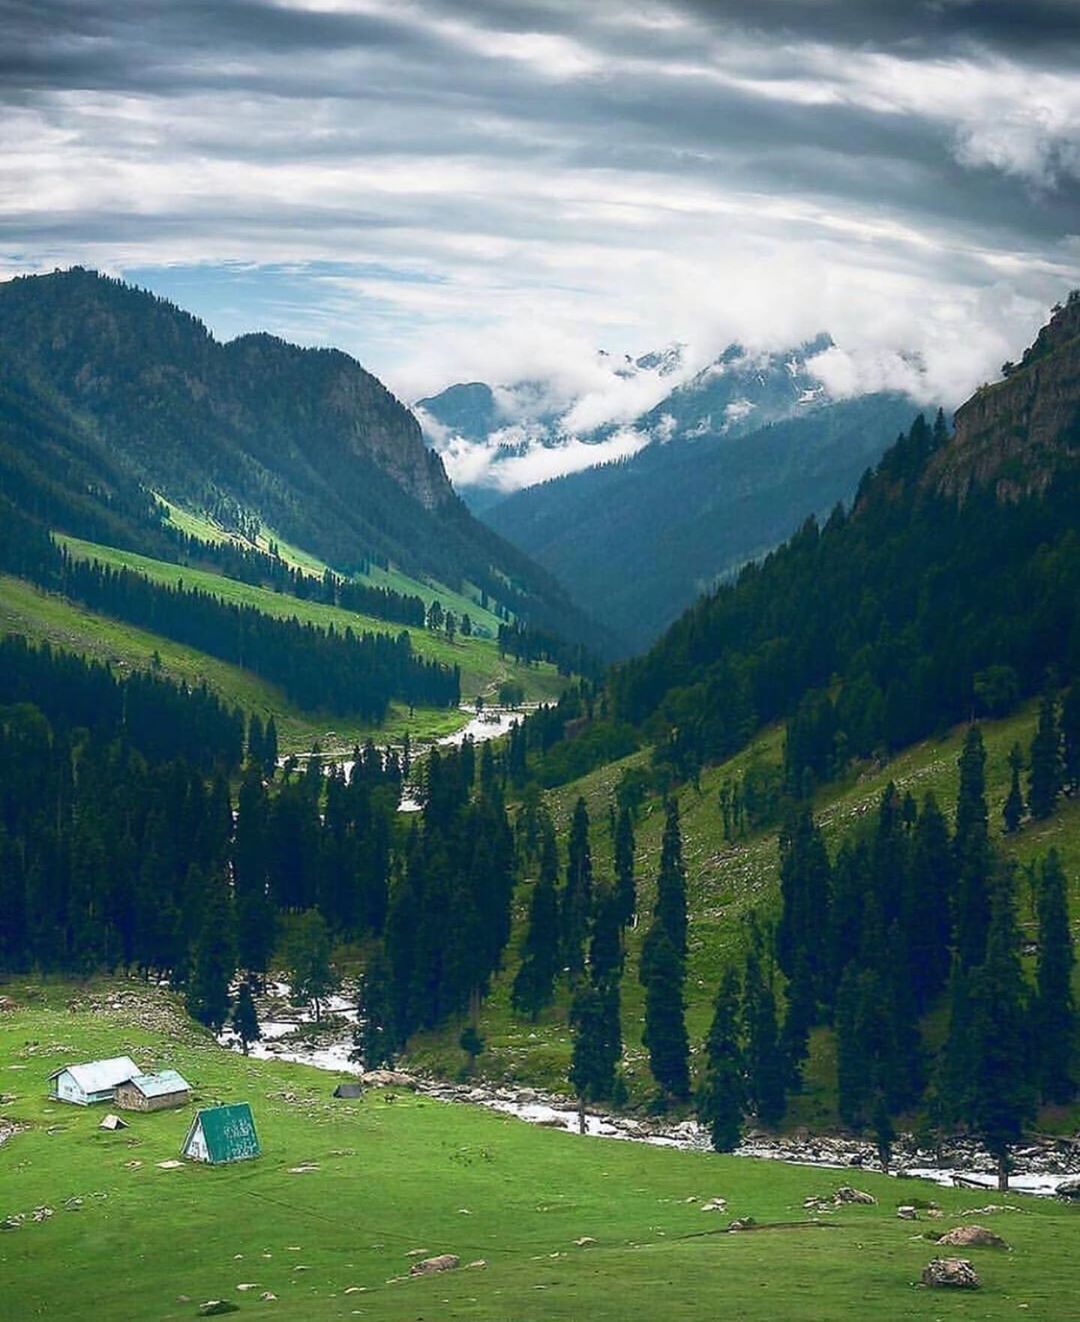 Himalayas Trekkers on Instagram: “Location